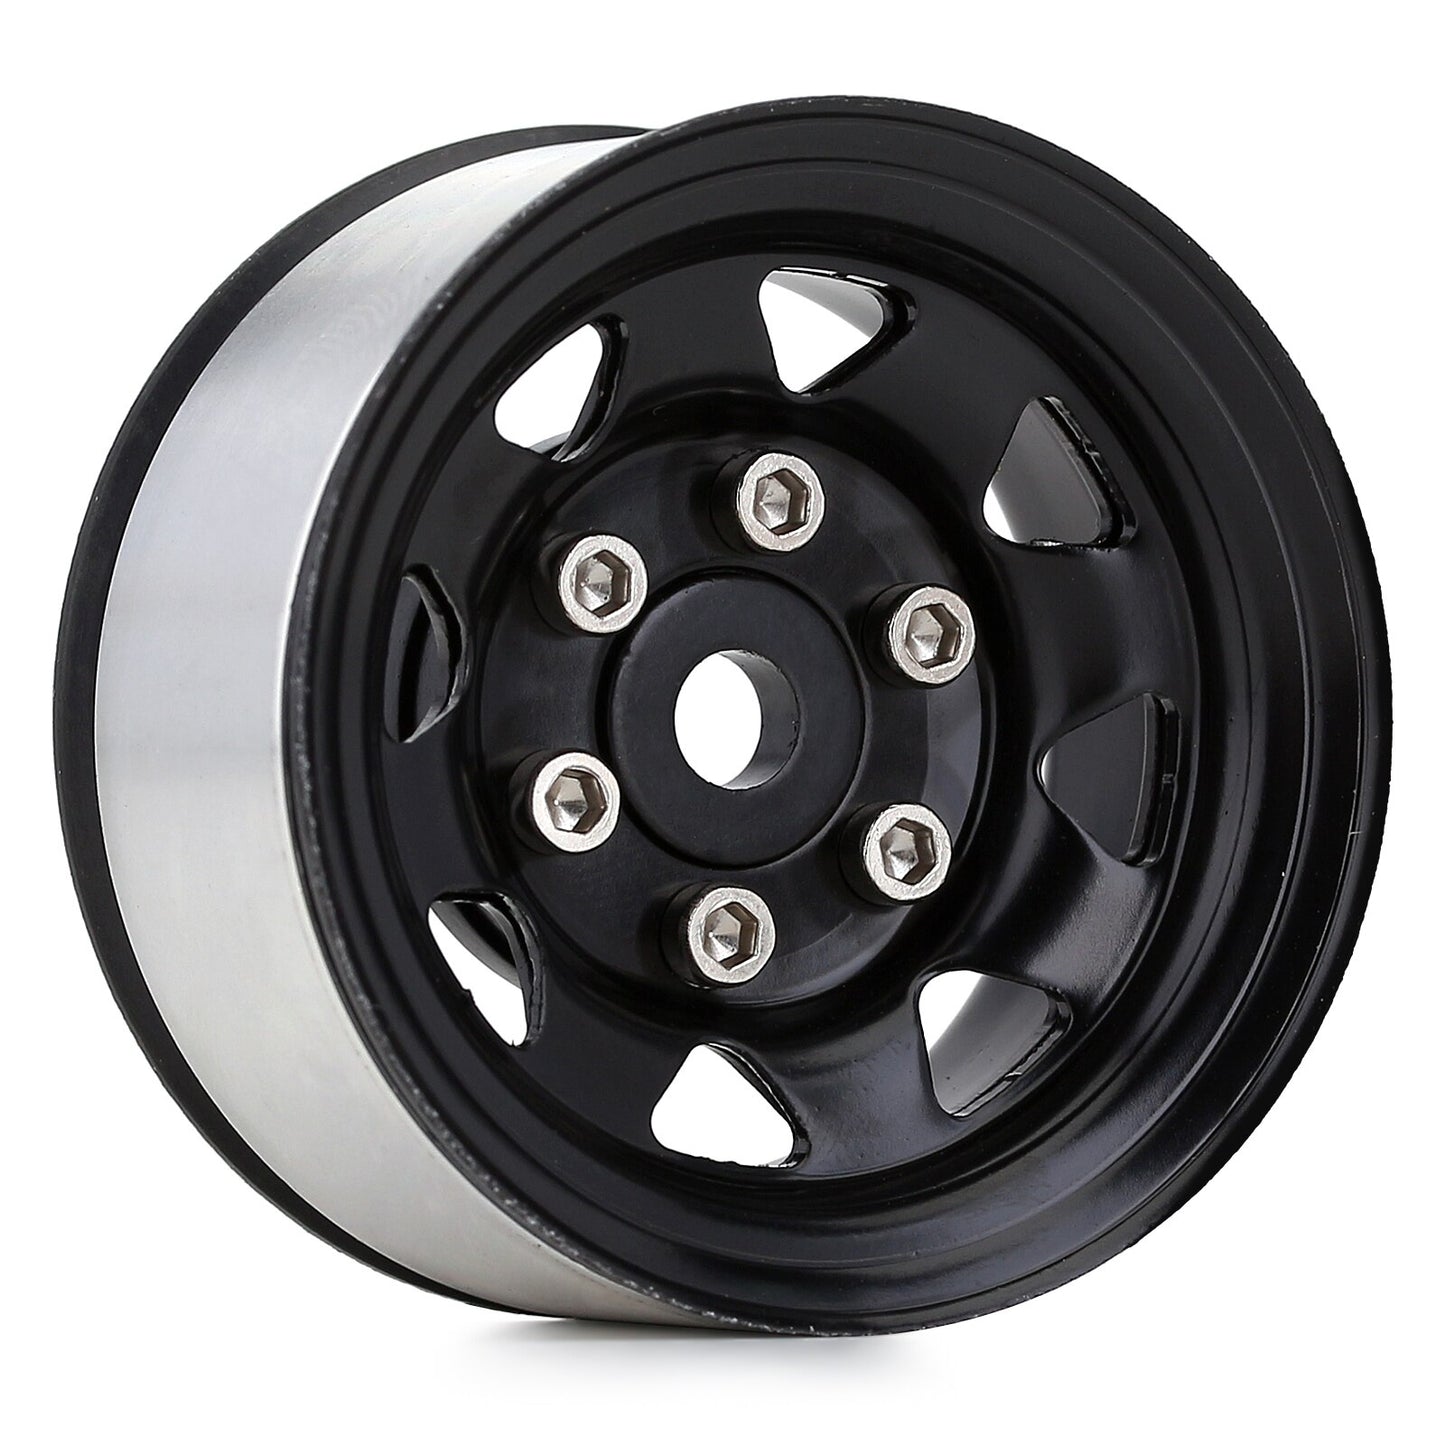 INJORA 4PCS Metal 1.55" Beadlock Wheel Rim for 1/10 RC Crawler Car Axial 90069 D90 TF2 Tamiya CC01 LC70 MST JIMNY